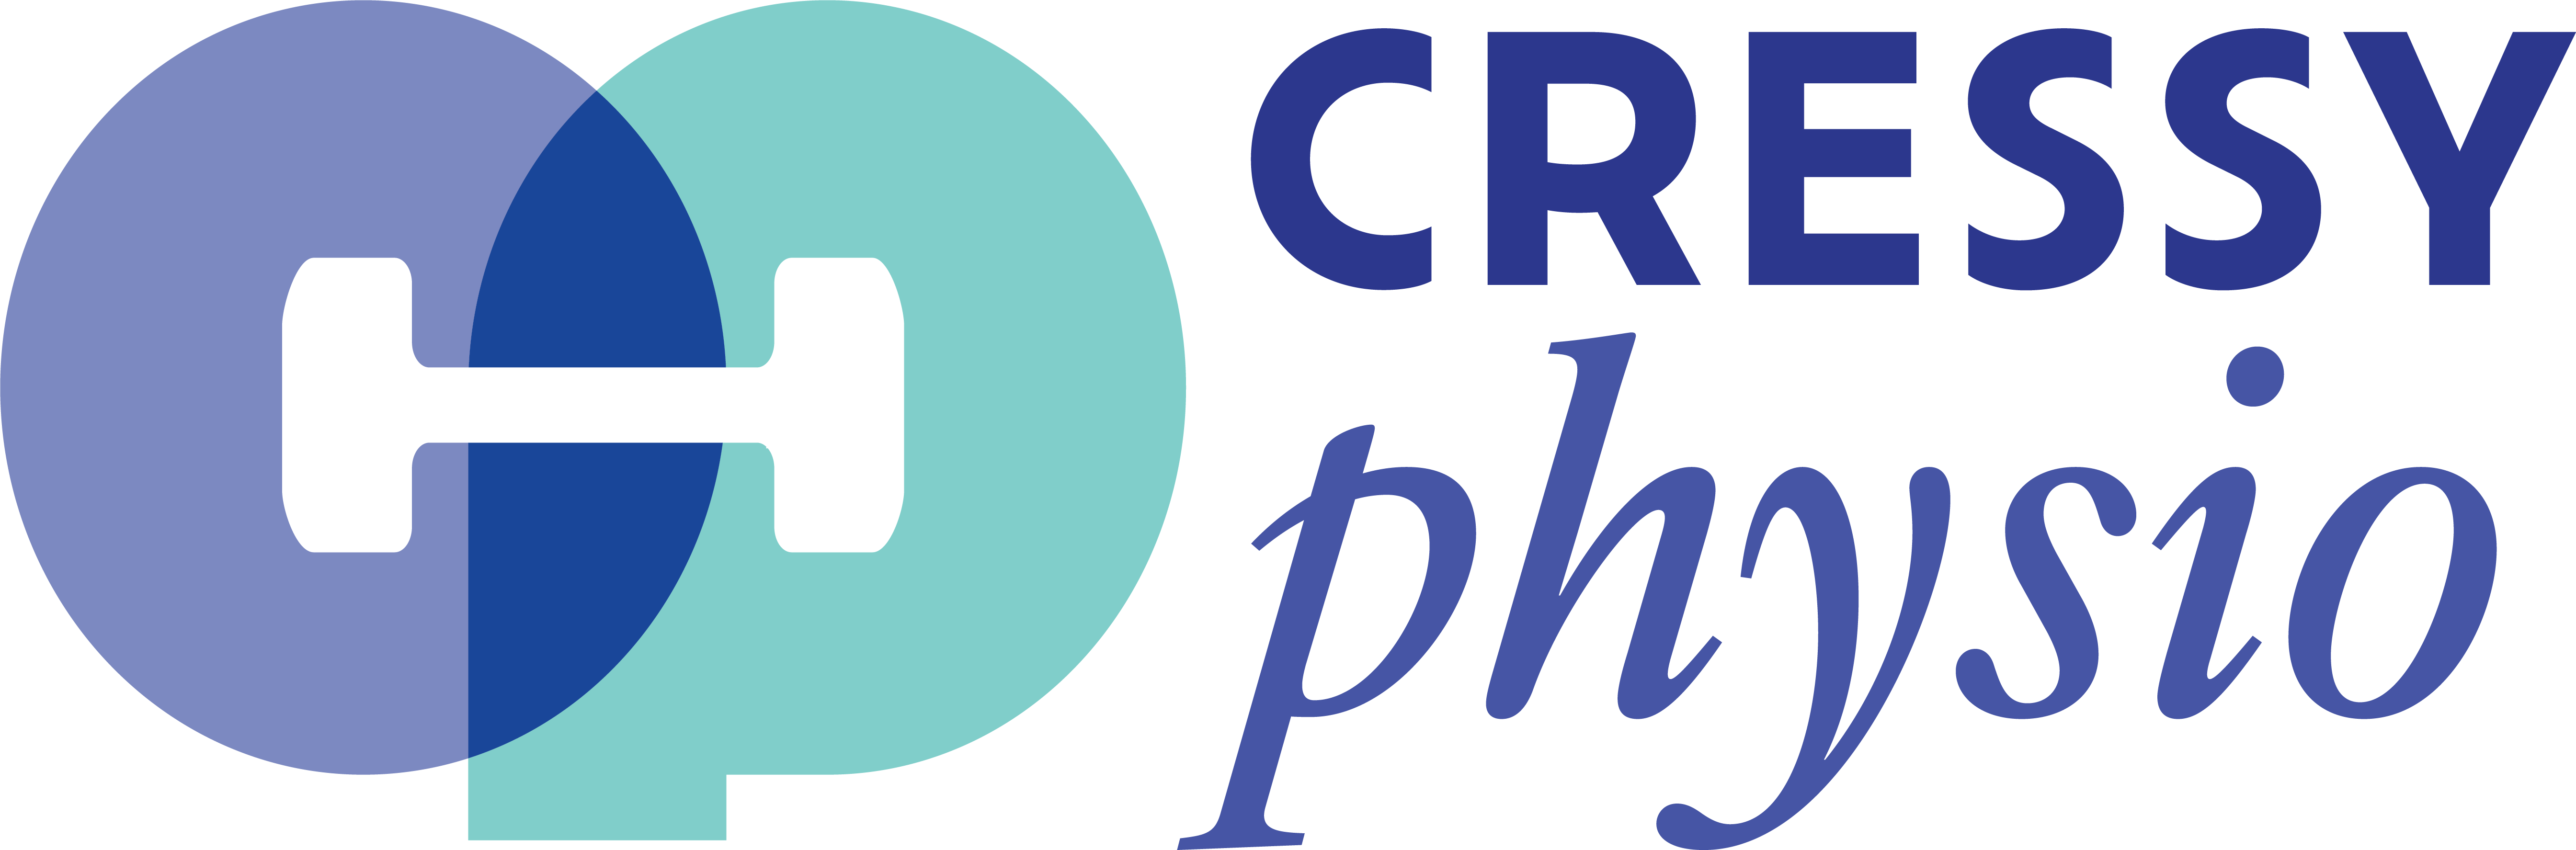 cressy physio logo